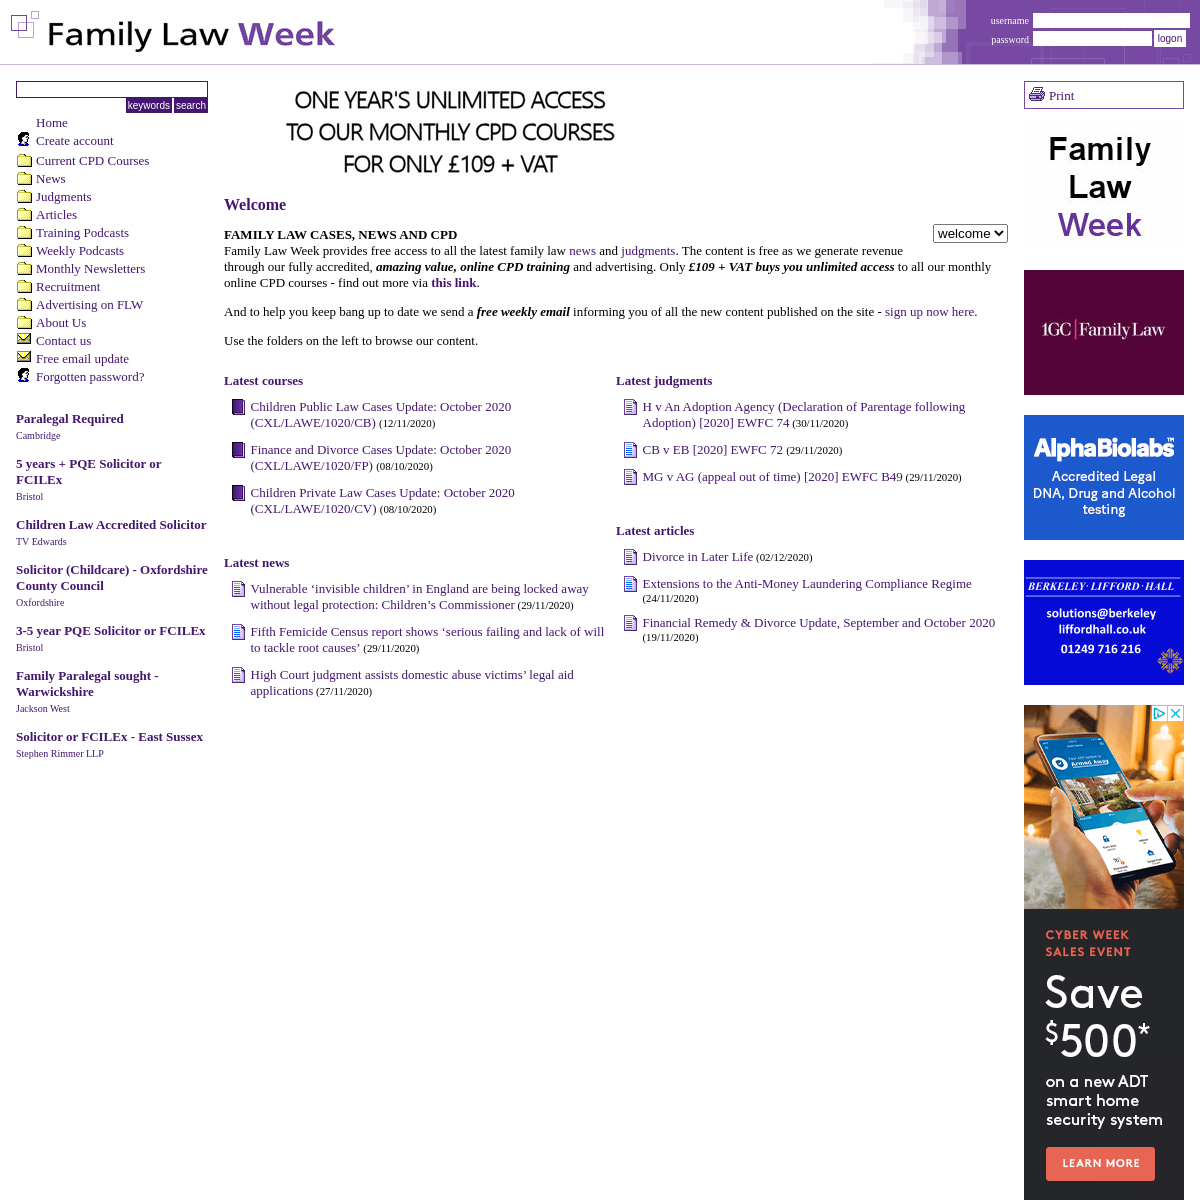 A complete backup of familylawweek.co.uk